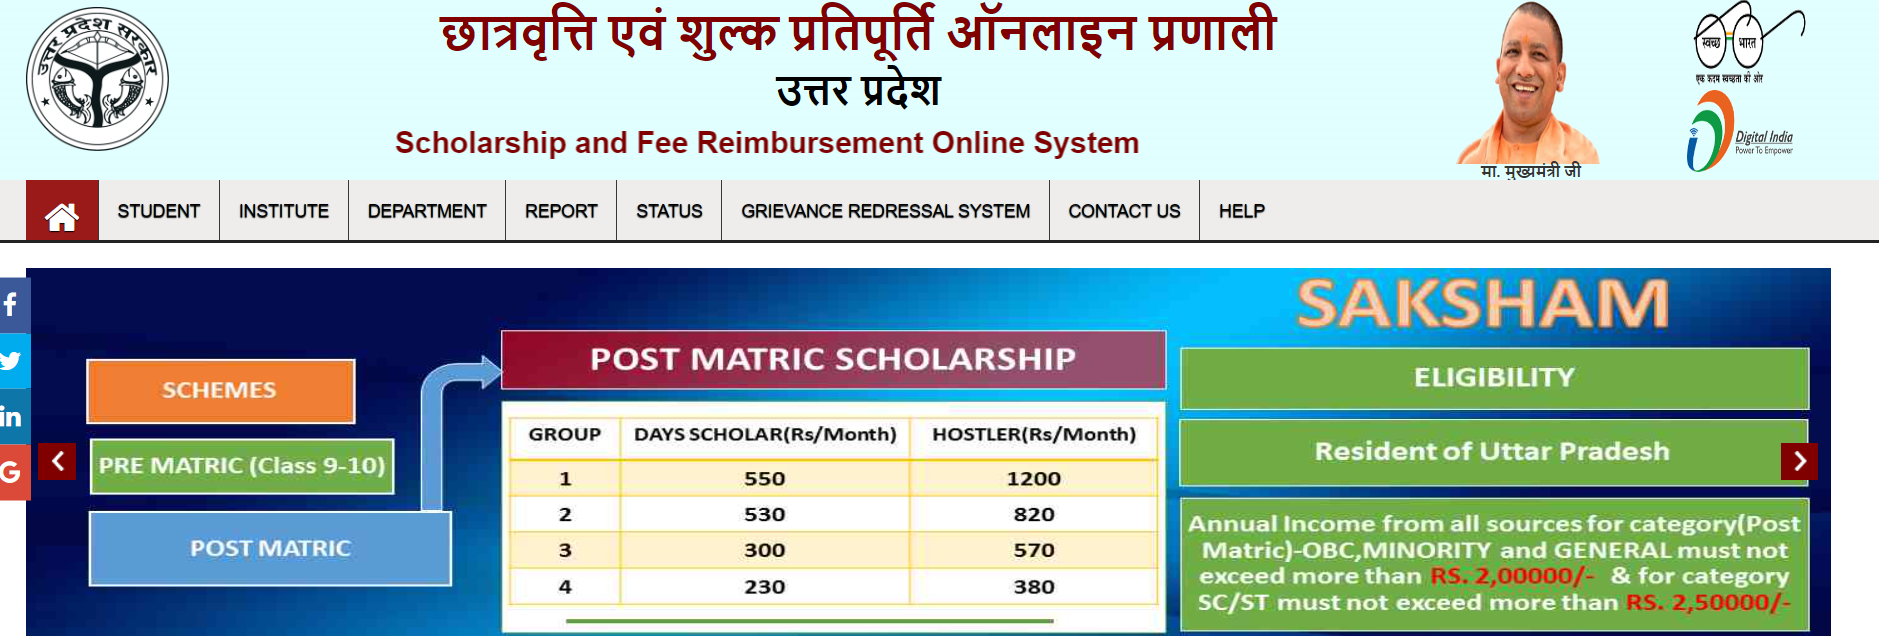 UP Scholarship Online Portal